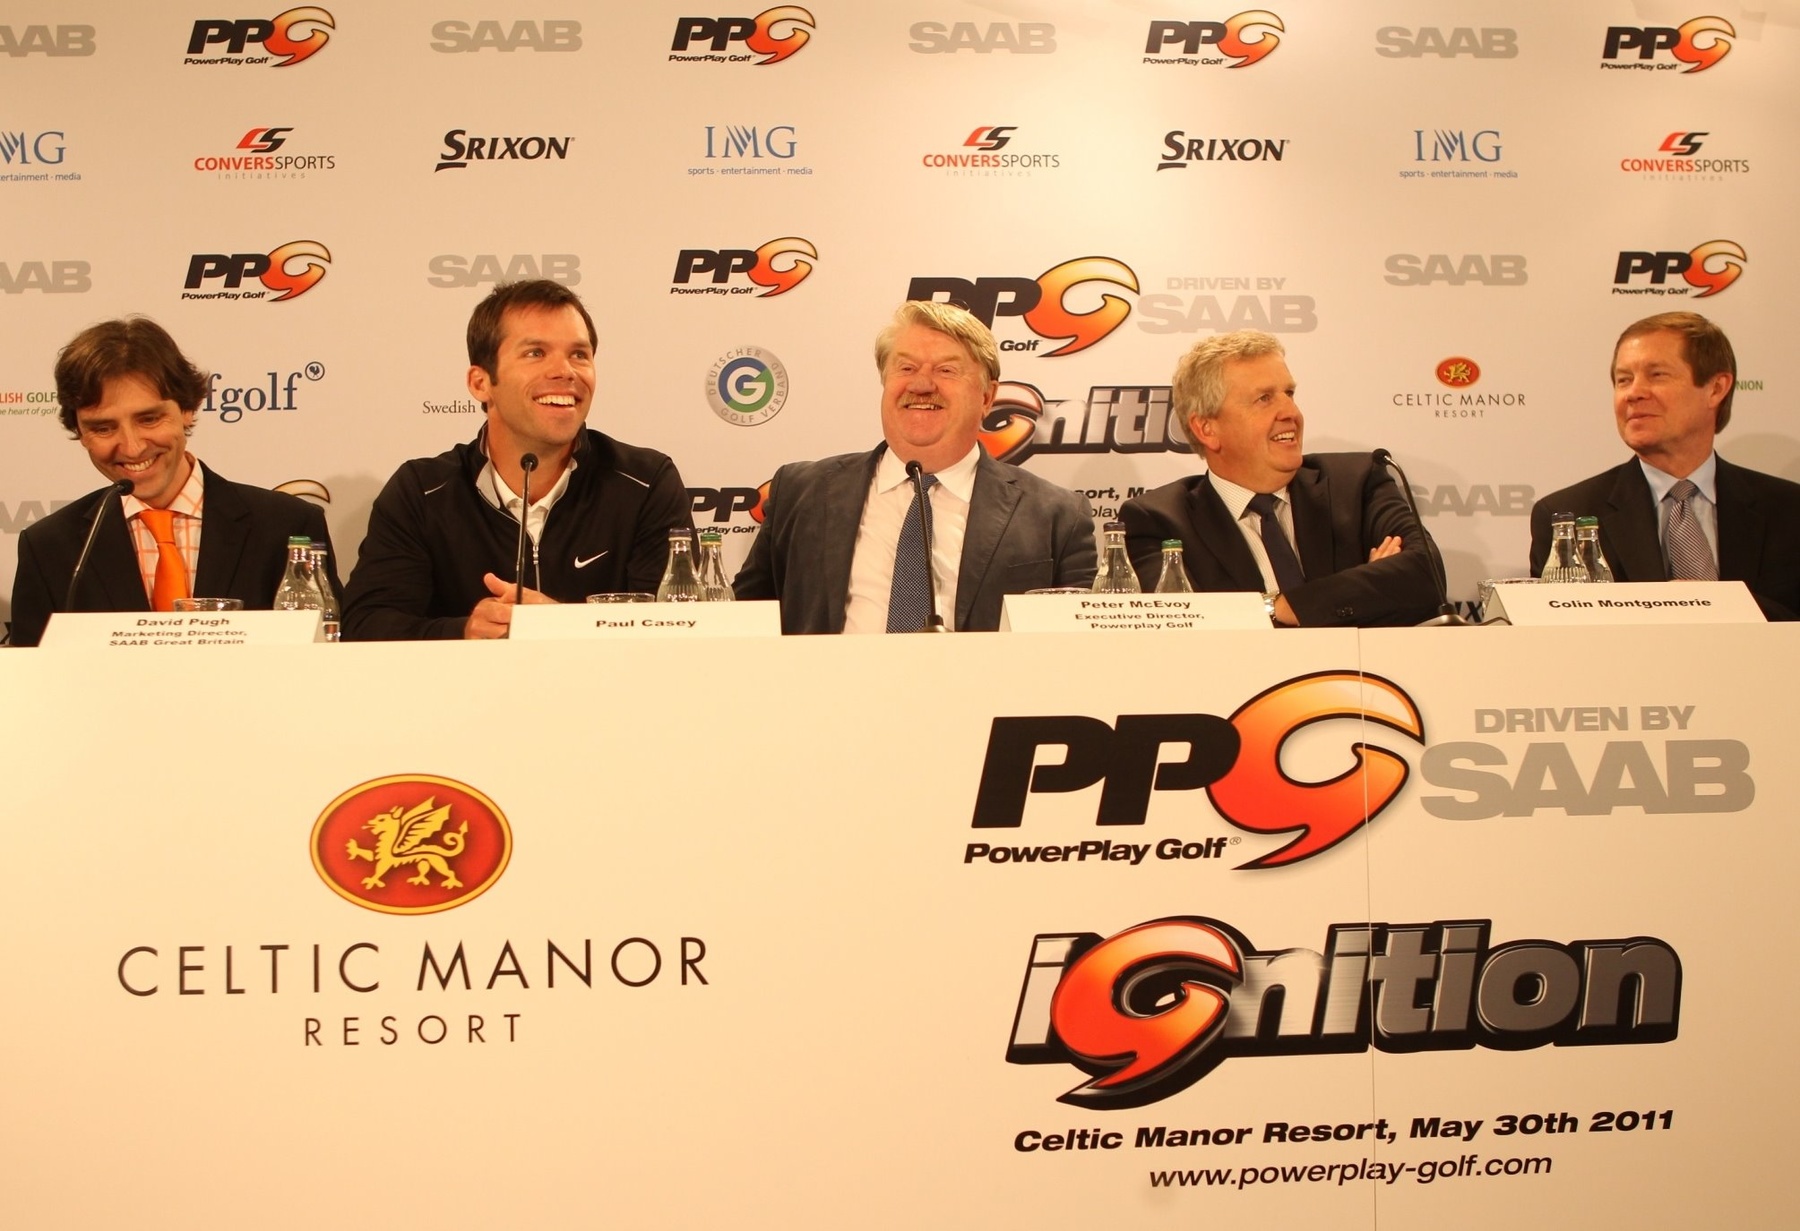 PowerPlay Golf Press Conference Panel – David Pugh, Saab; Paul Casey; Peter McEvoy, Executive Director; Colin Montgomerie; George O’Gradymod